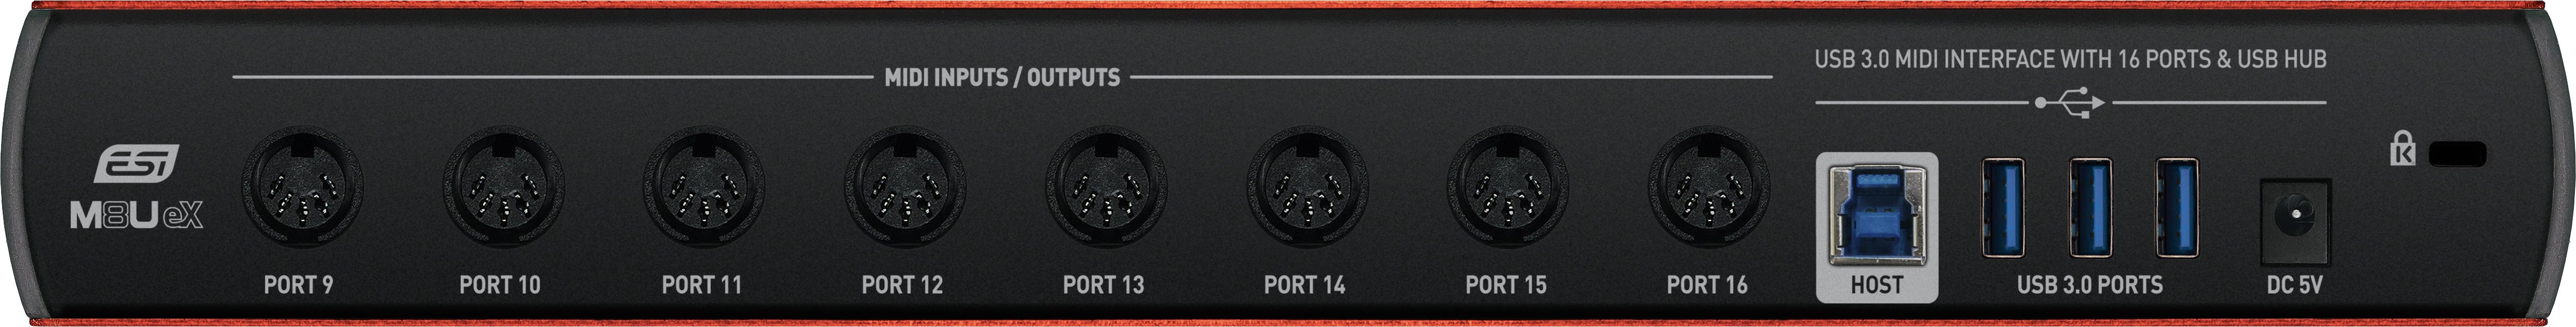 ESI Audio M8U eX - 16-port USB 3.0 MIDI interface with USB hub - Black/Orange